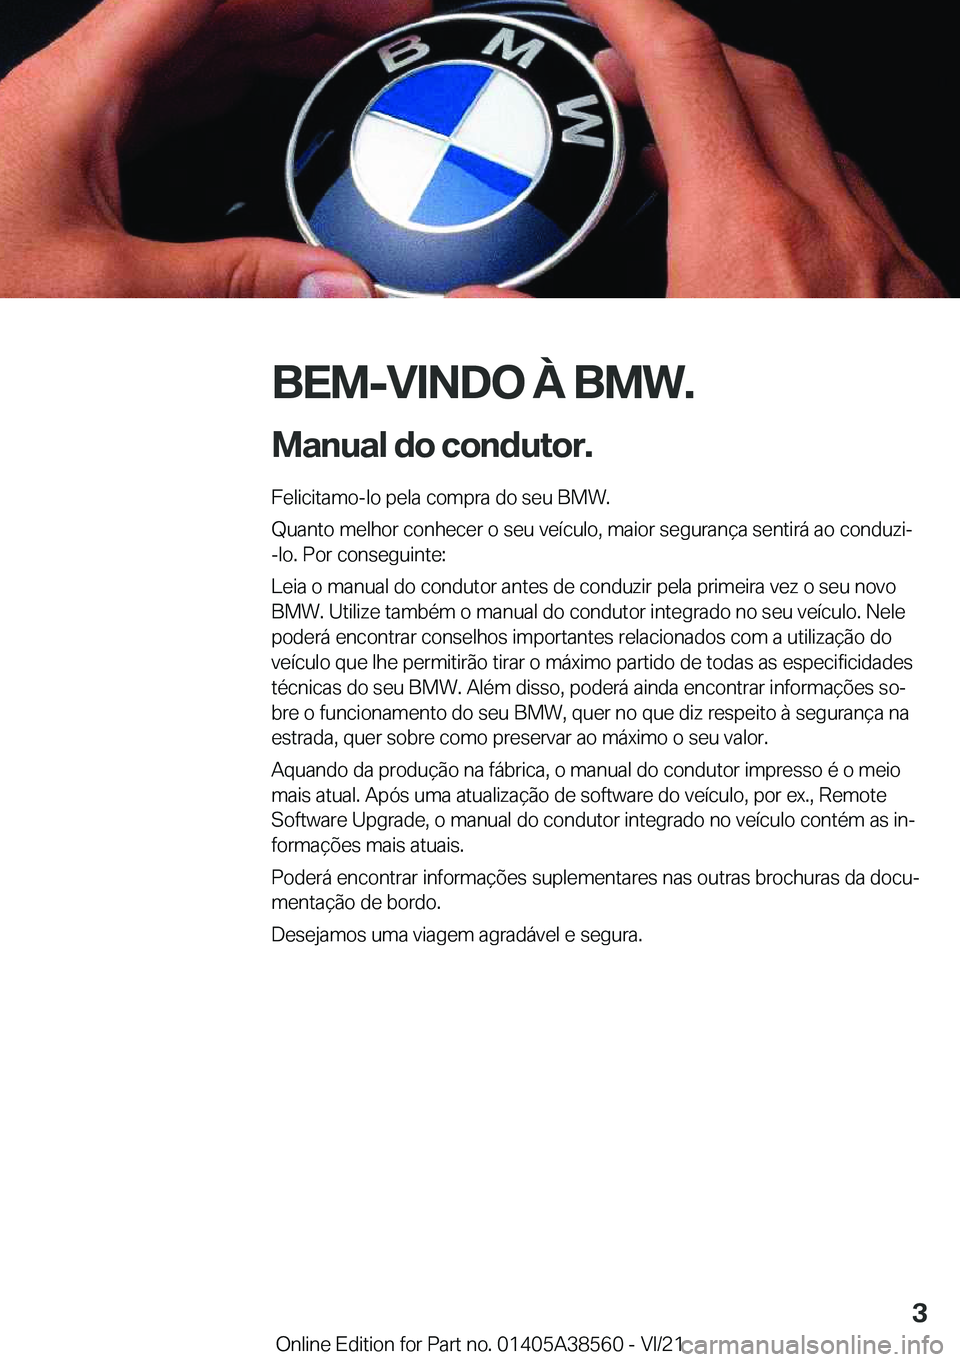 BMW X6 2022  Manual do condutor (in Portuguese) �B�E�M�-�V�I�N�D�O��À��B�M�W�.
�M�a�n�u�a�l��d�o��c�o�n�d�u�t�o�r�. �F�e�l�i�c�i�t�a�m�o�-�l�o��p�e�l�a��c�o�m�p�r�a��d�o��s�e�u��B�M�W�.
�Q�u�a�n�t�o��m�e�l�h�o�r��c�o�n�h�e�c�e�r��o��s